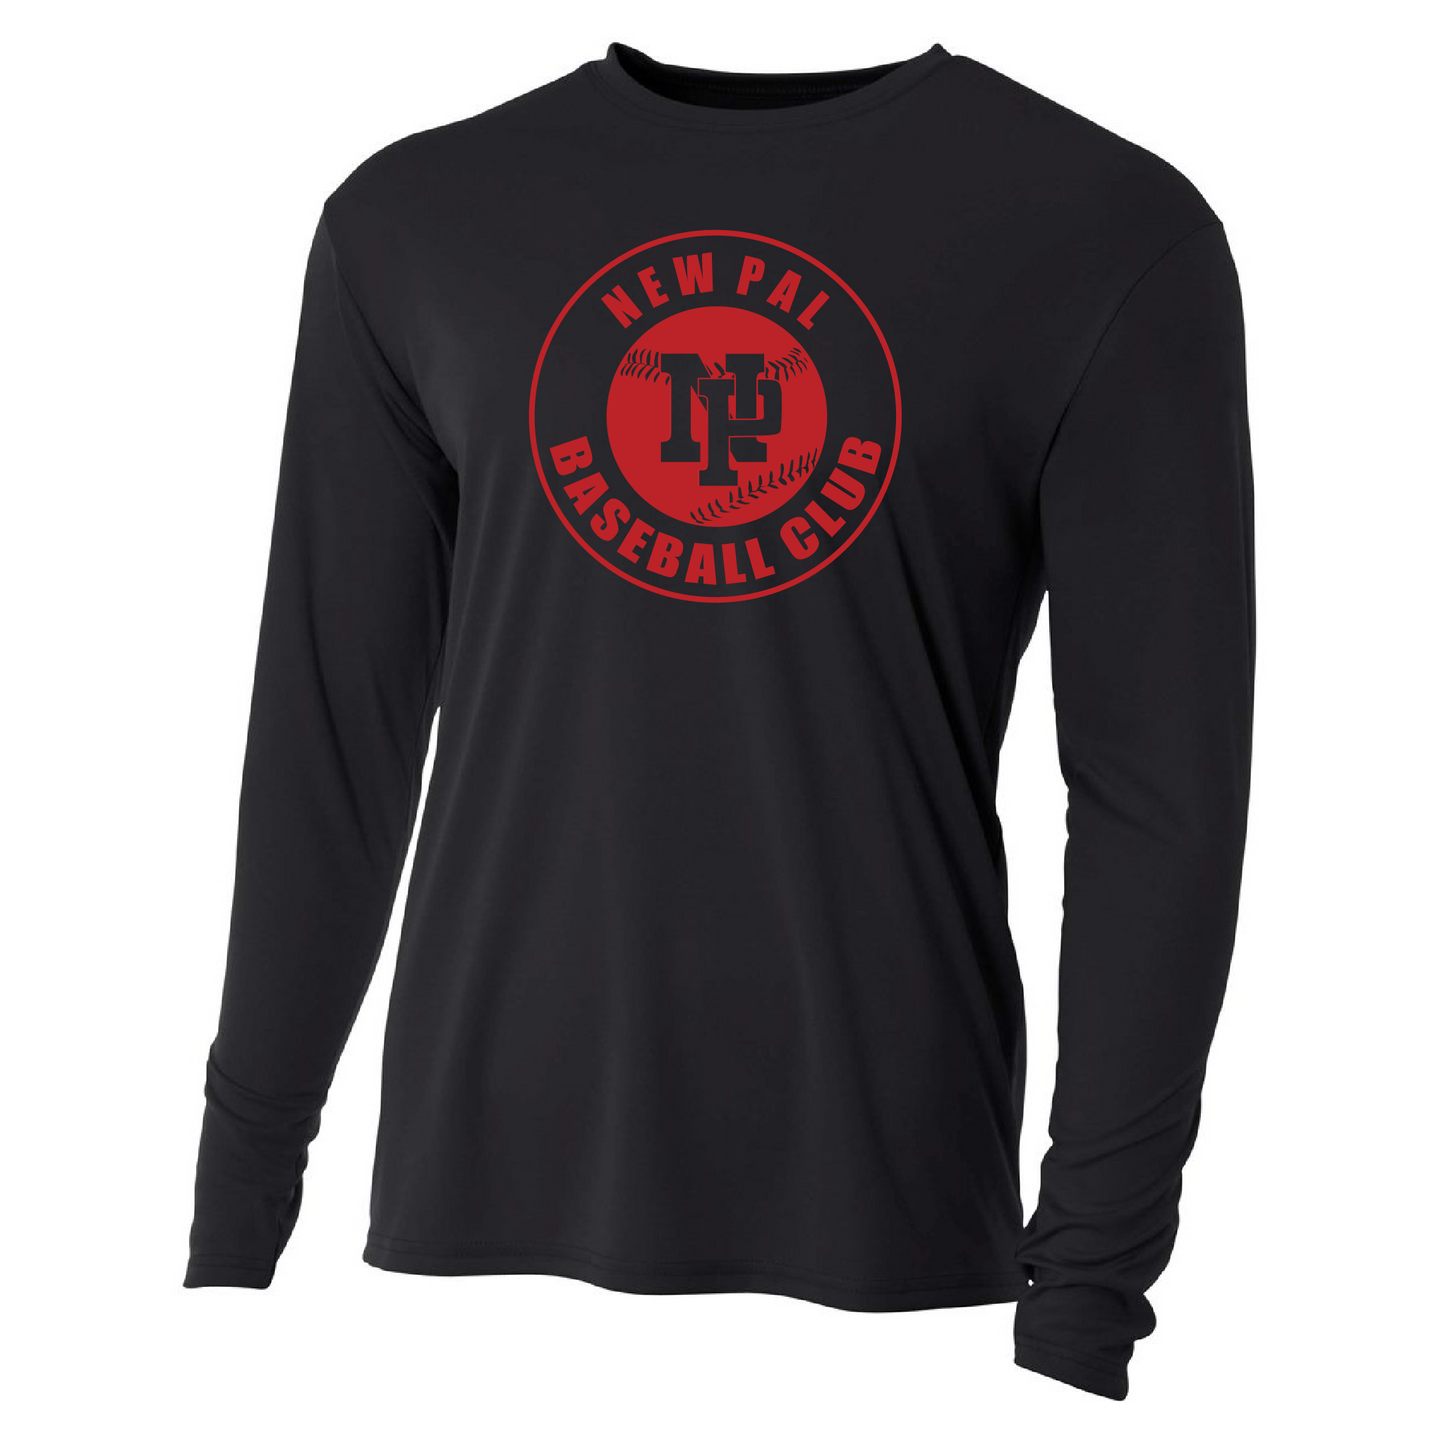 Mens/Youth Long Sleeve T-Shirt - NP Baseball Club (red logo)